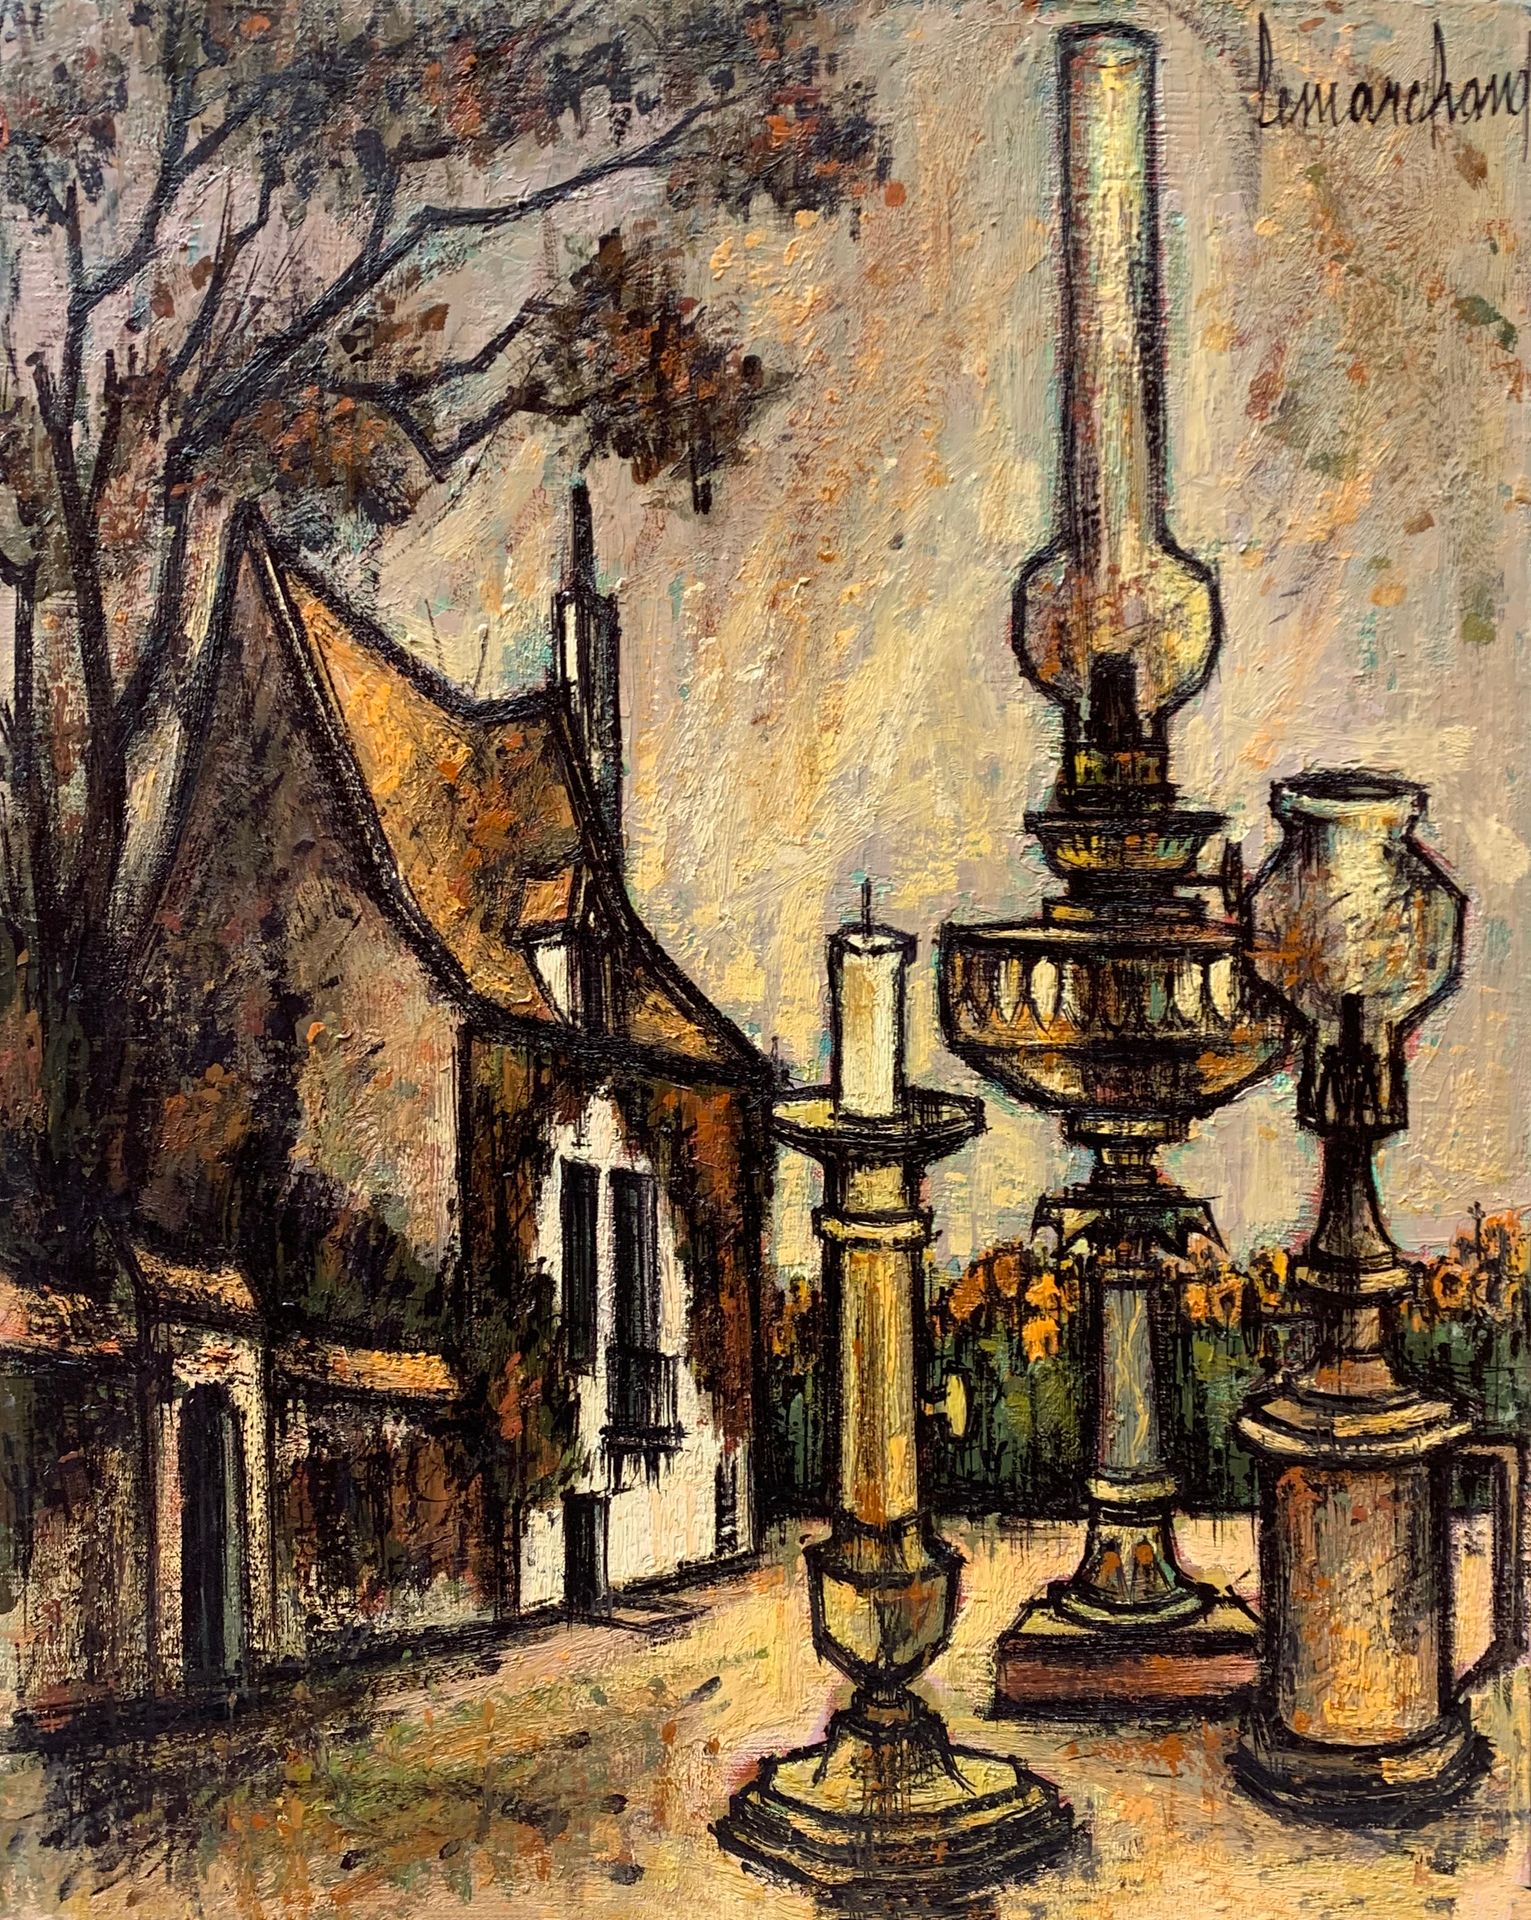 Null 皮埃尔-莱马赫德 (1906-1970)

油灯和烛台

布面油画，右上角有签名

61 x 50厘米。